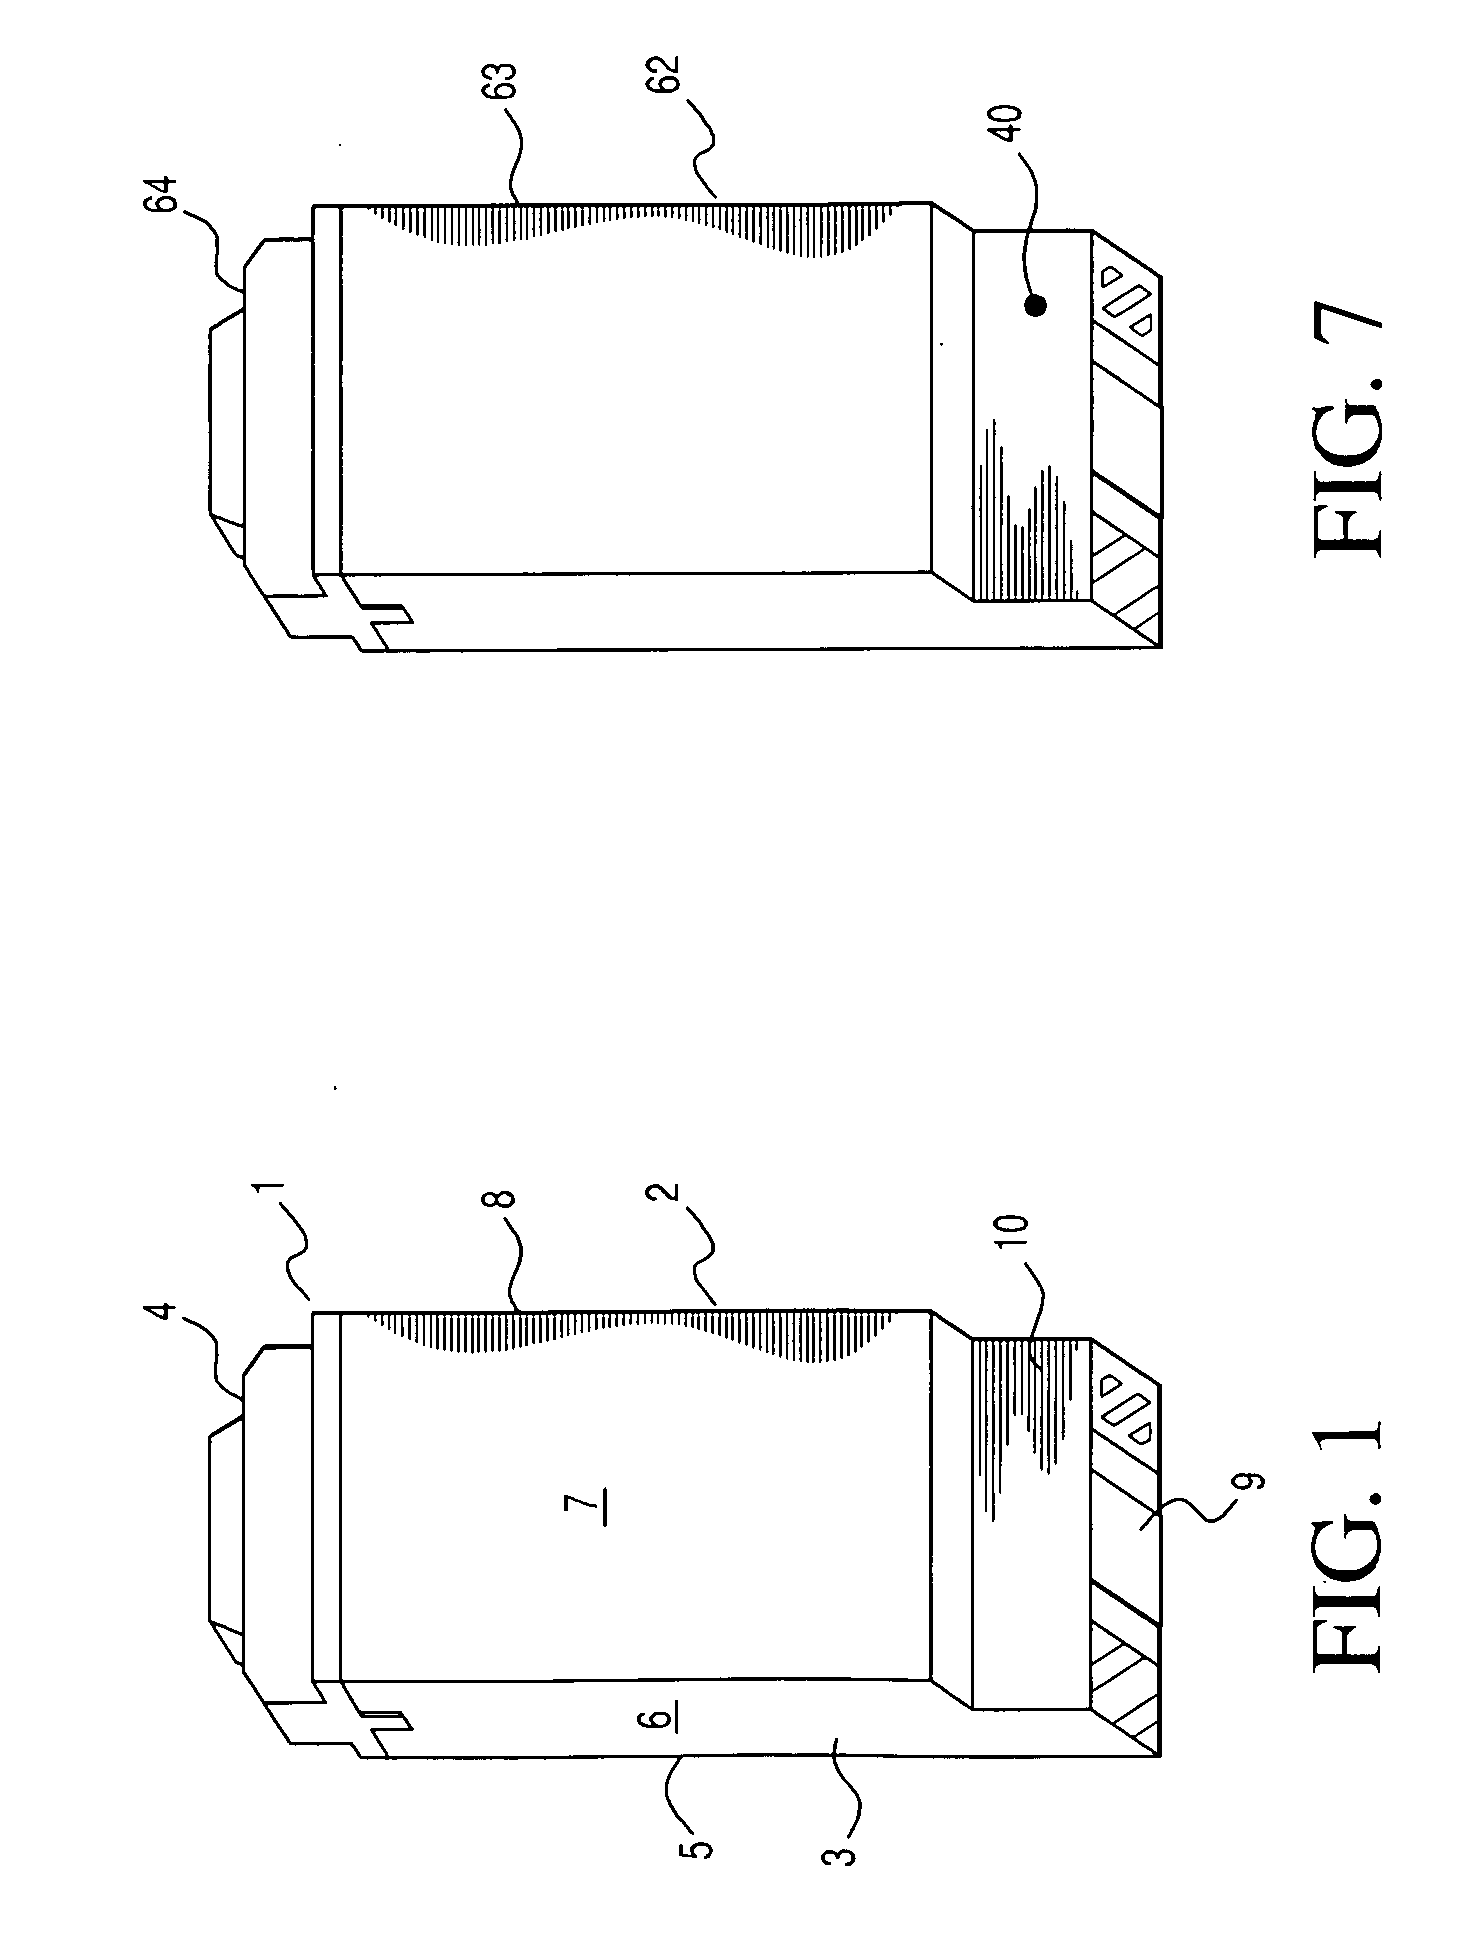 Method of cleaning an inkjet cartridge